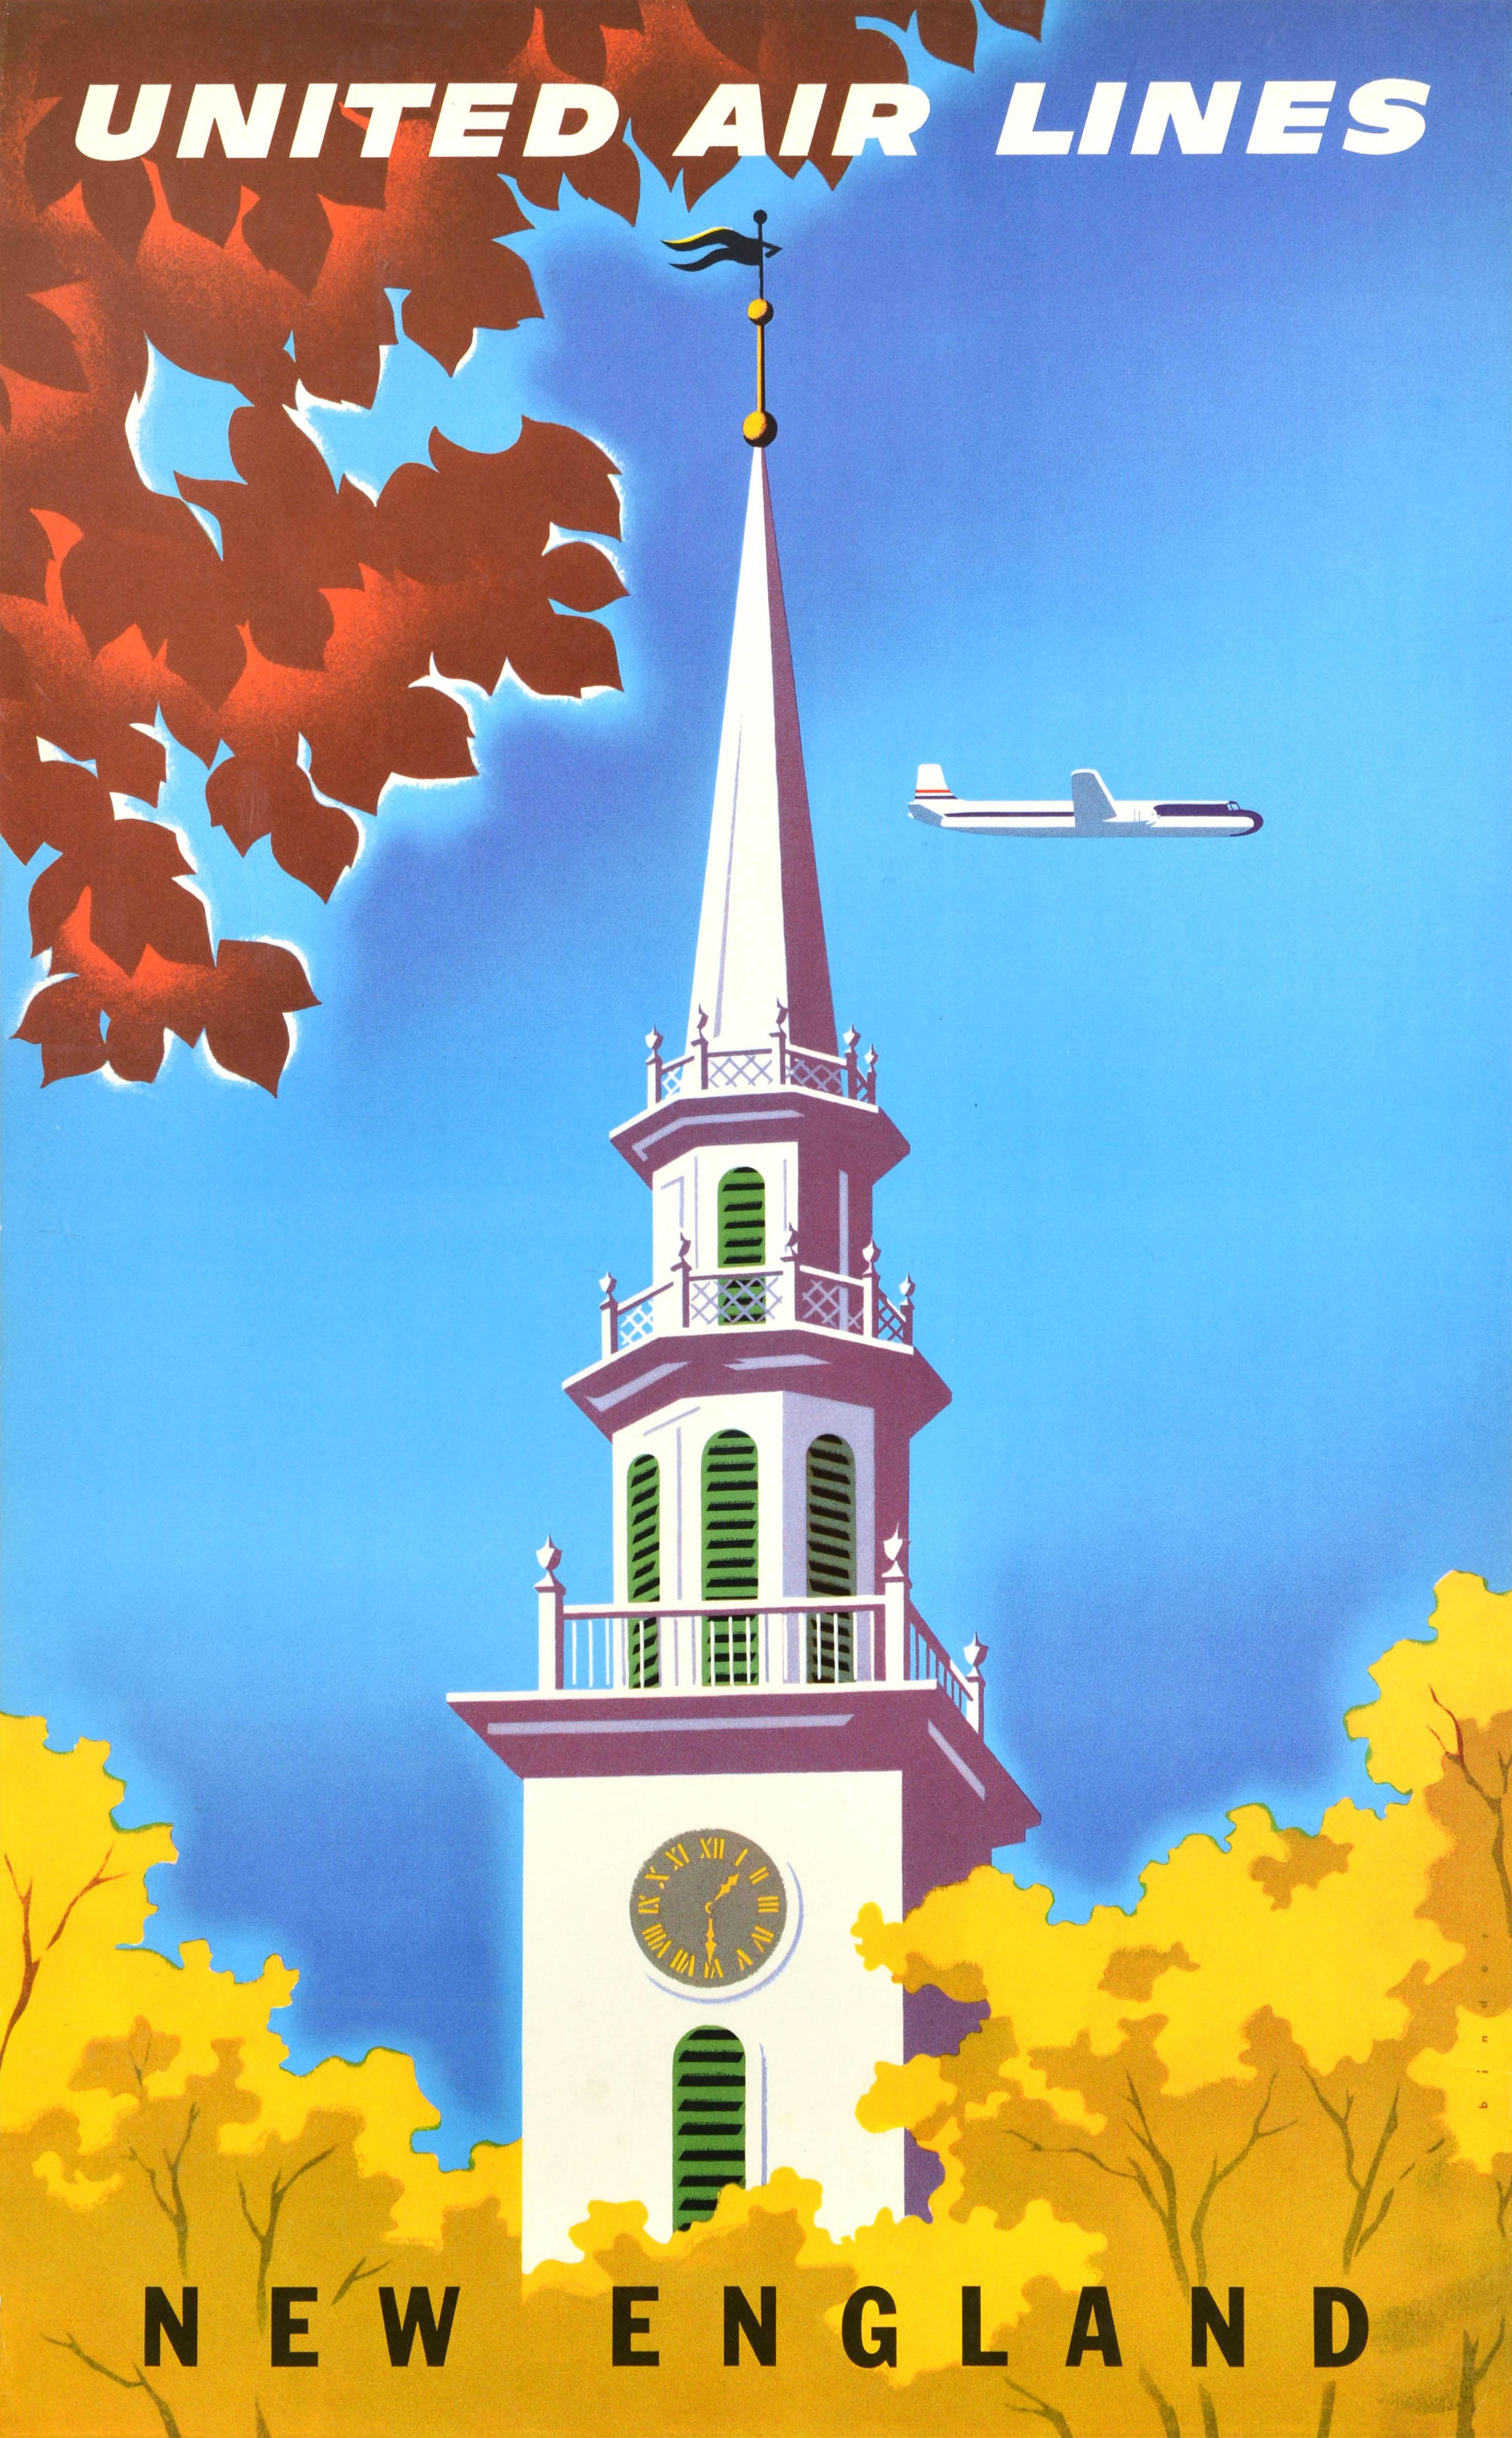 Joseph Binder Print - Original Vintage Travel Advertising Poster United Air Lines New England Binder